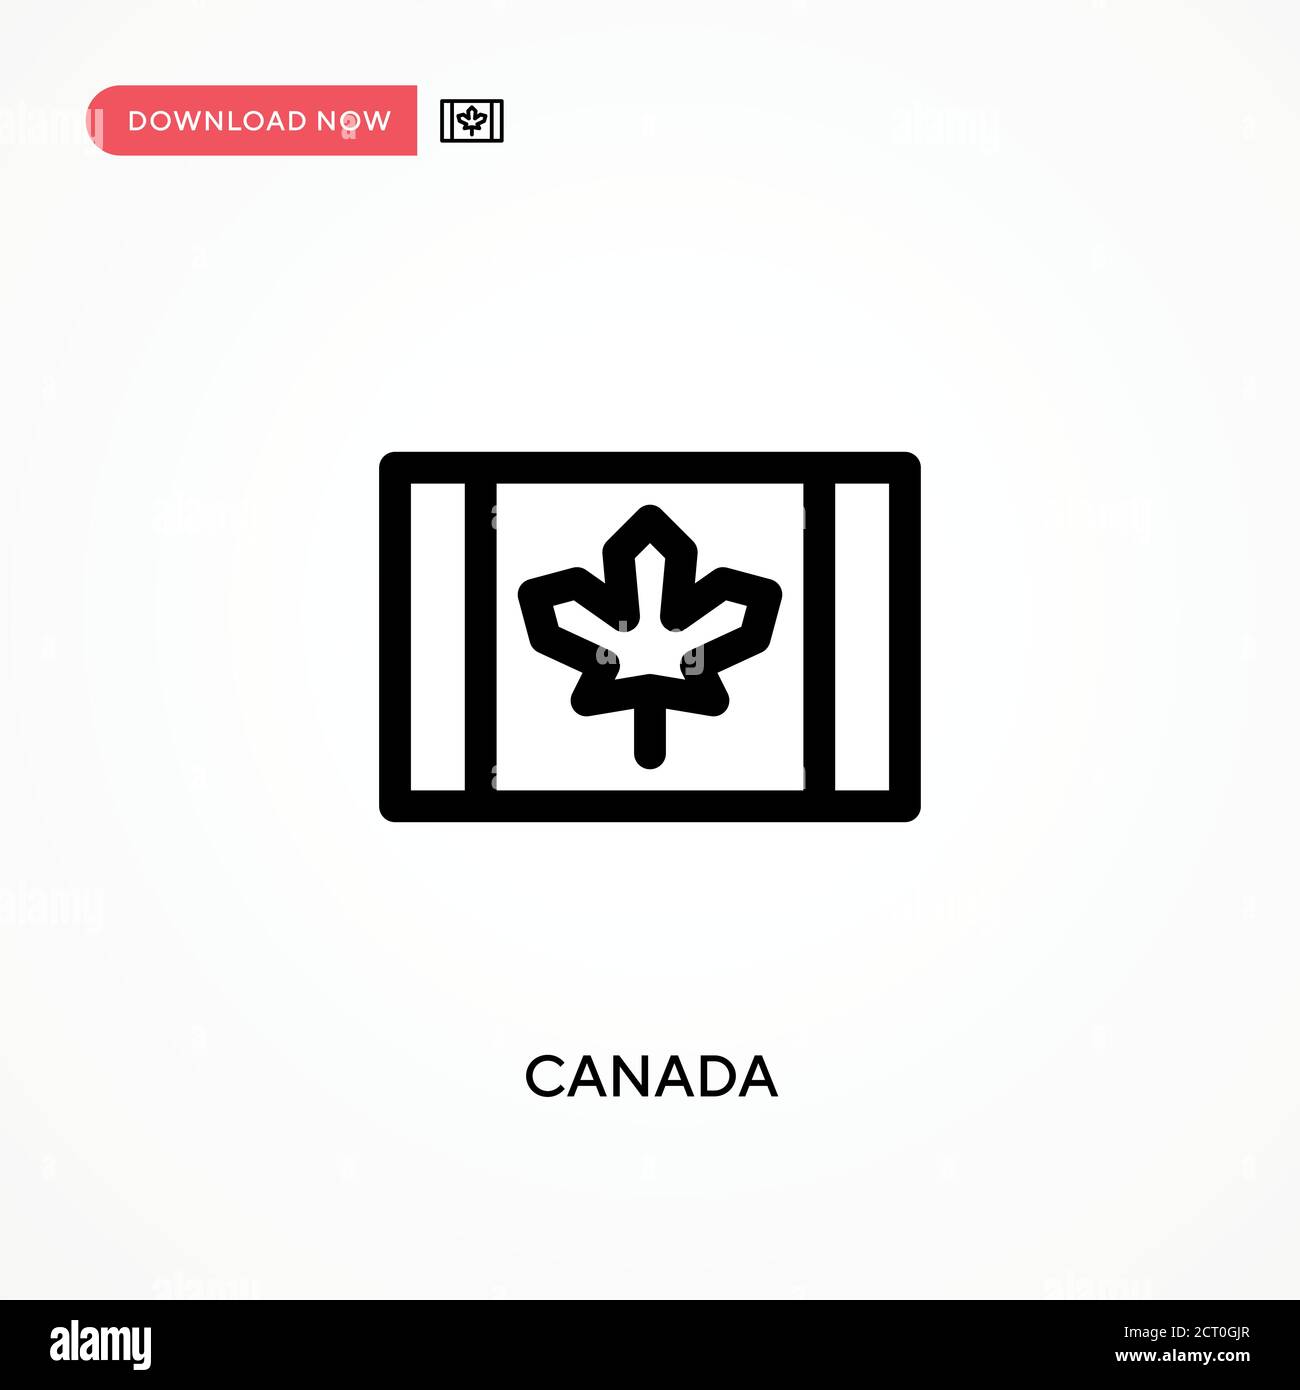 Einfaches Vektorsymbol Kanada. Moderne, einfache flache Vektor-Illustration für Website oder mobile App Stock Vektor